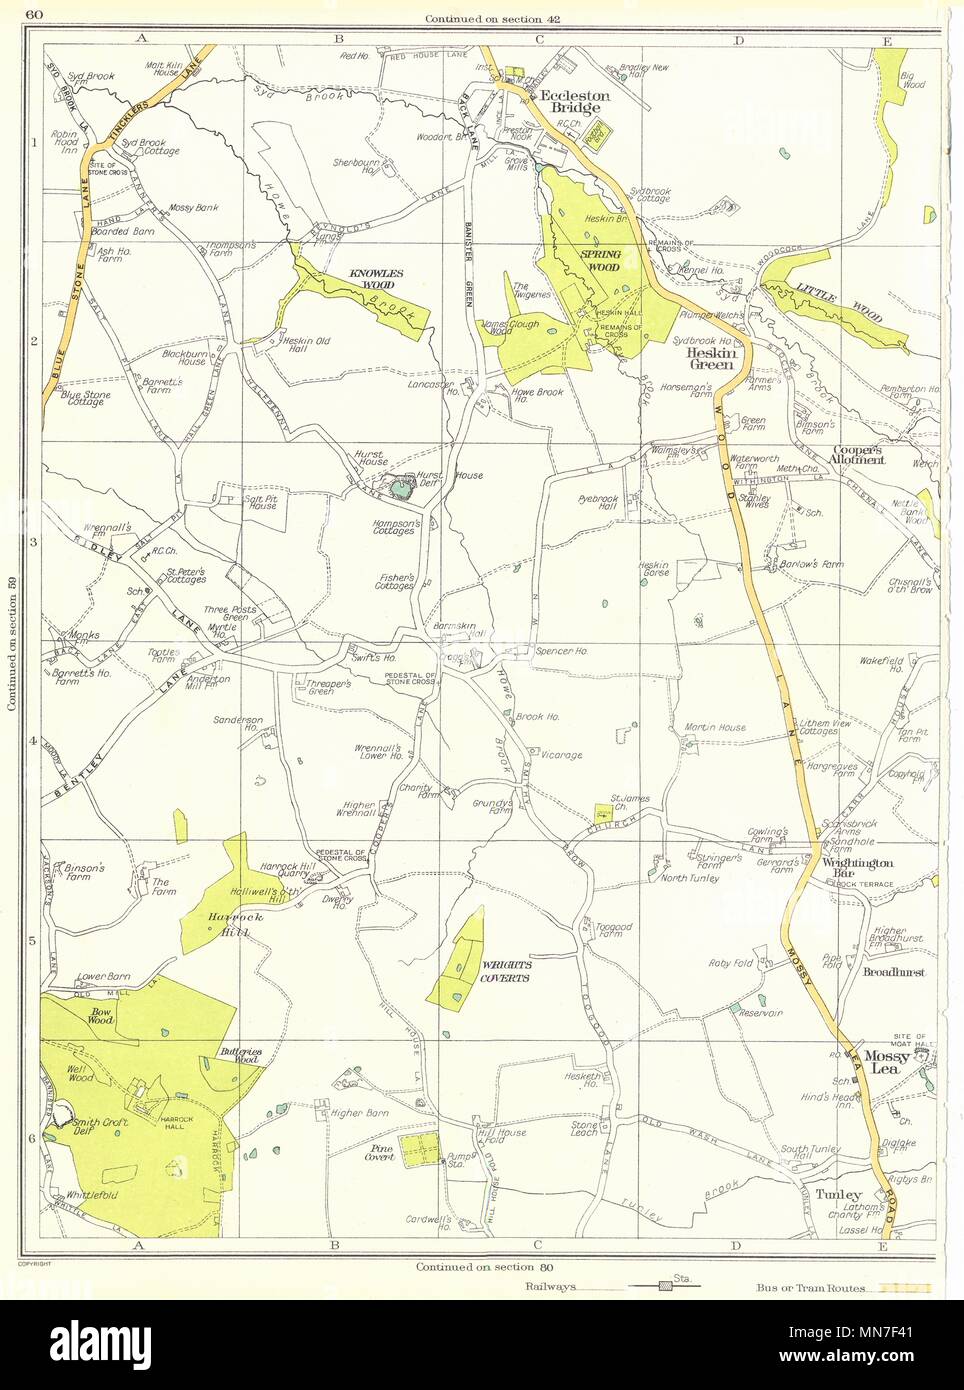 LANCASHIRE.Mossy Lea,Tunley,Broadhurst,Heskin Green,Eccleston Bridge 1935 map Stock Photo